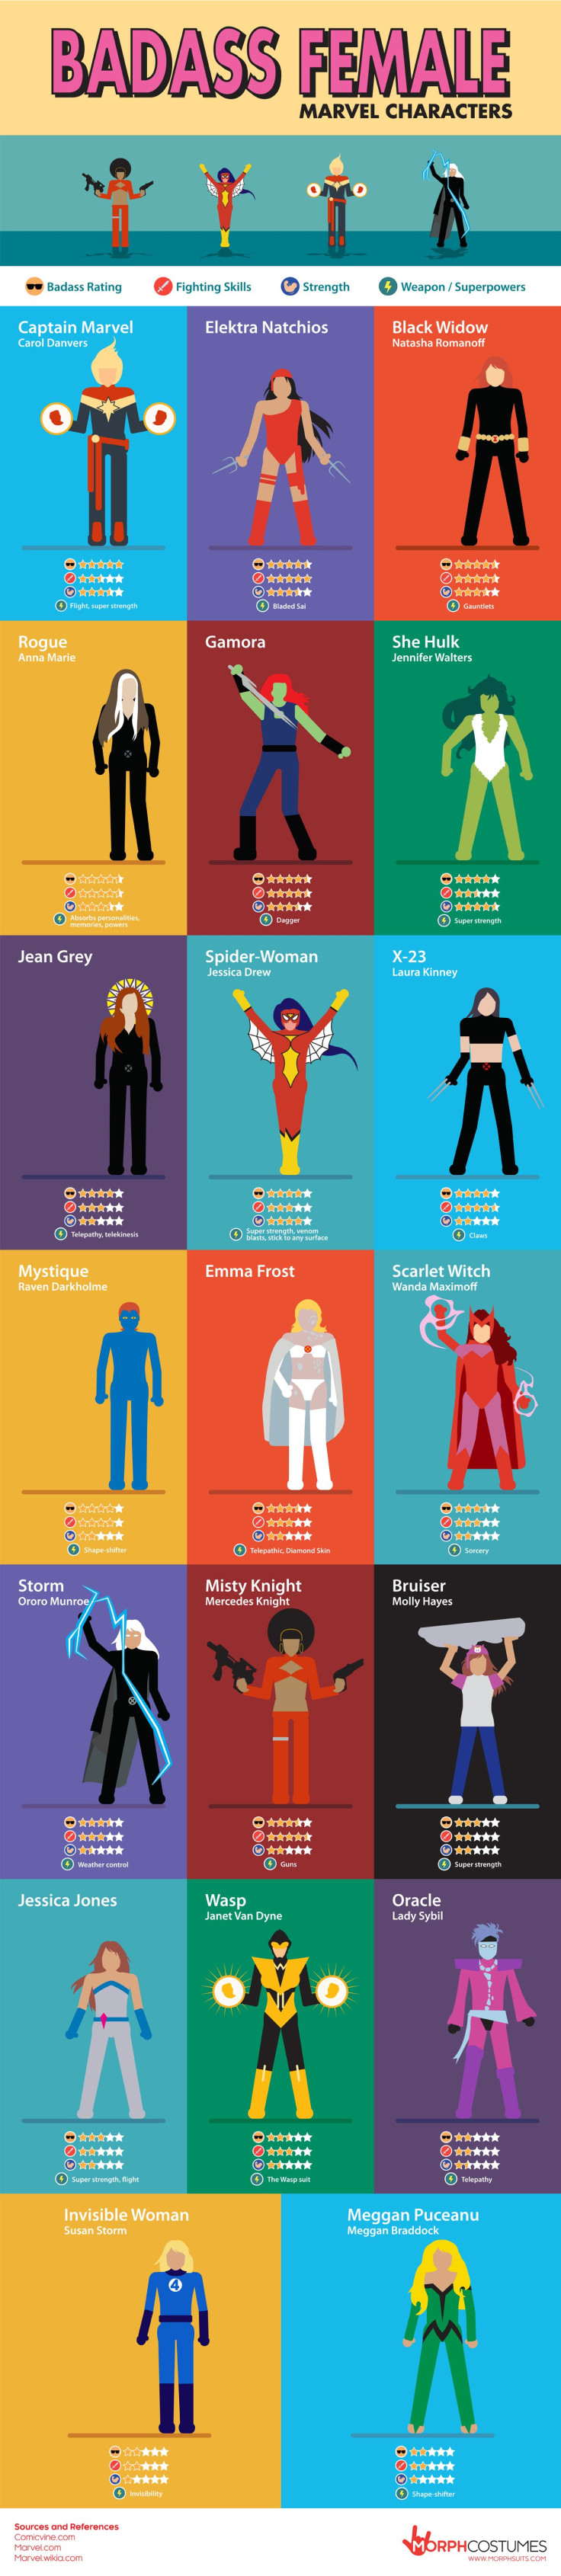 Badass Female Marvel Characters